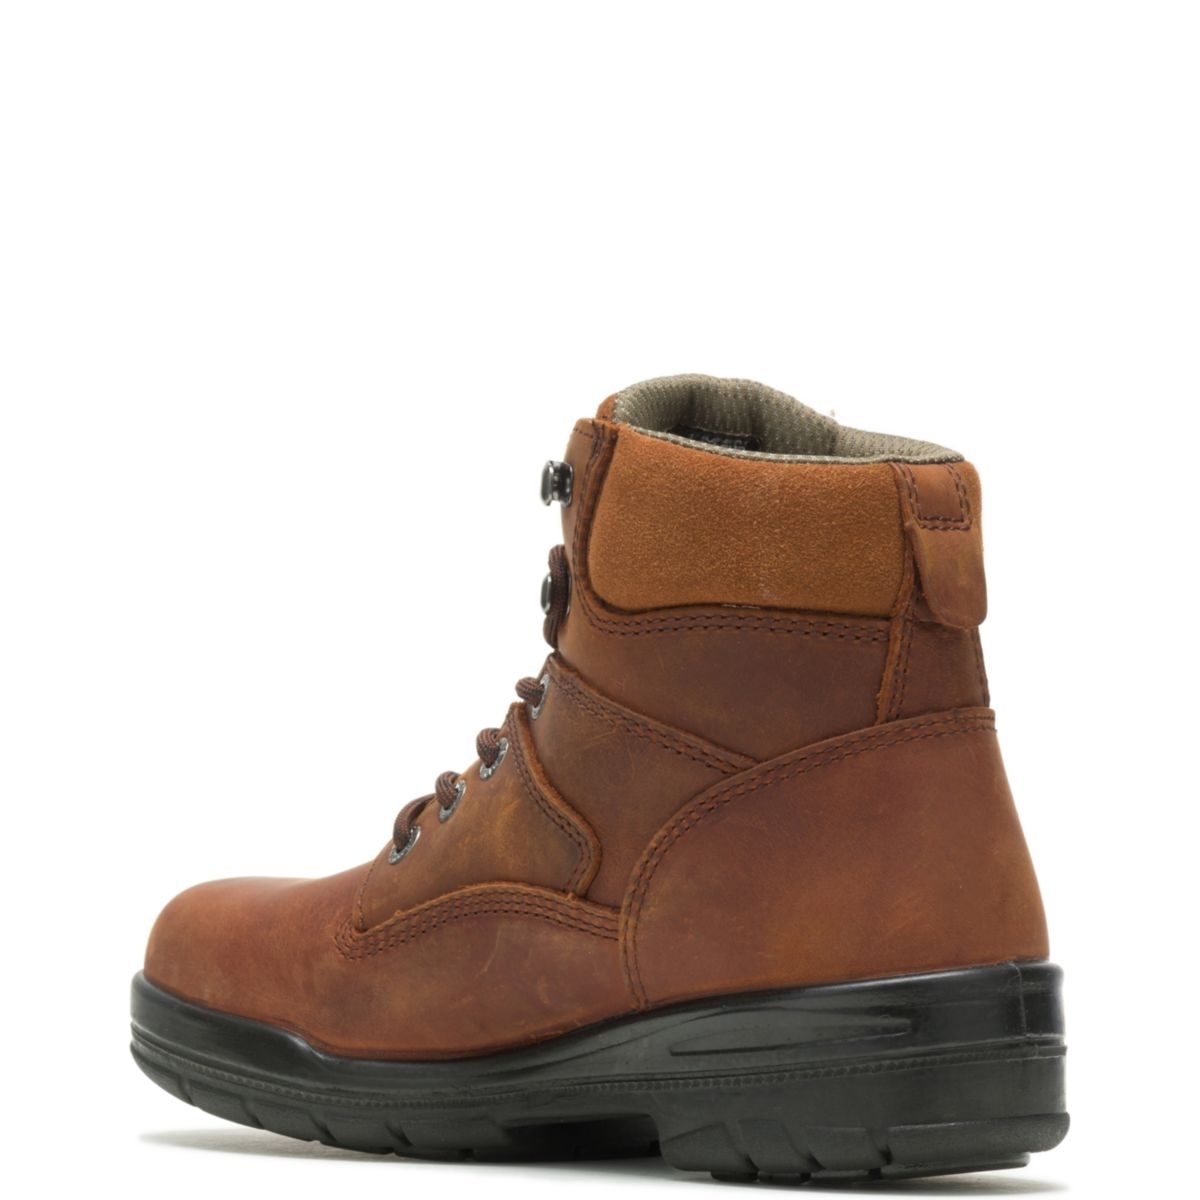 WOLVERINE Men's 6 DuraShocksÂ® Slip Resistant Steel Toe Work Boot Canyon - W02053 BRN/STL - BRN/STL, 10-M